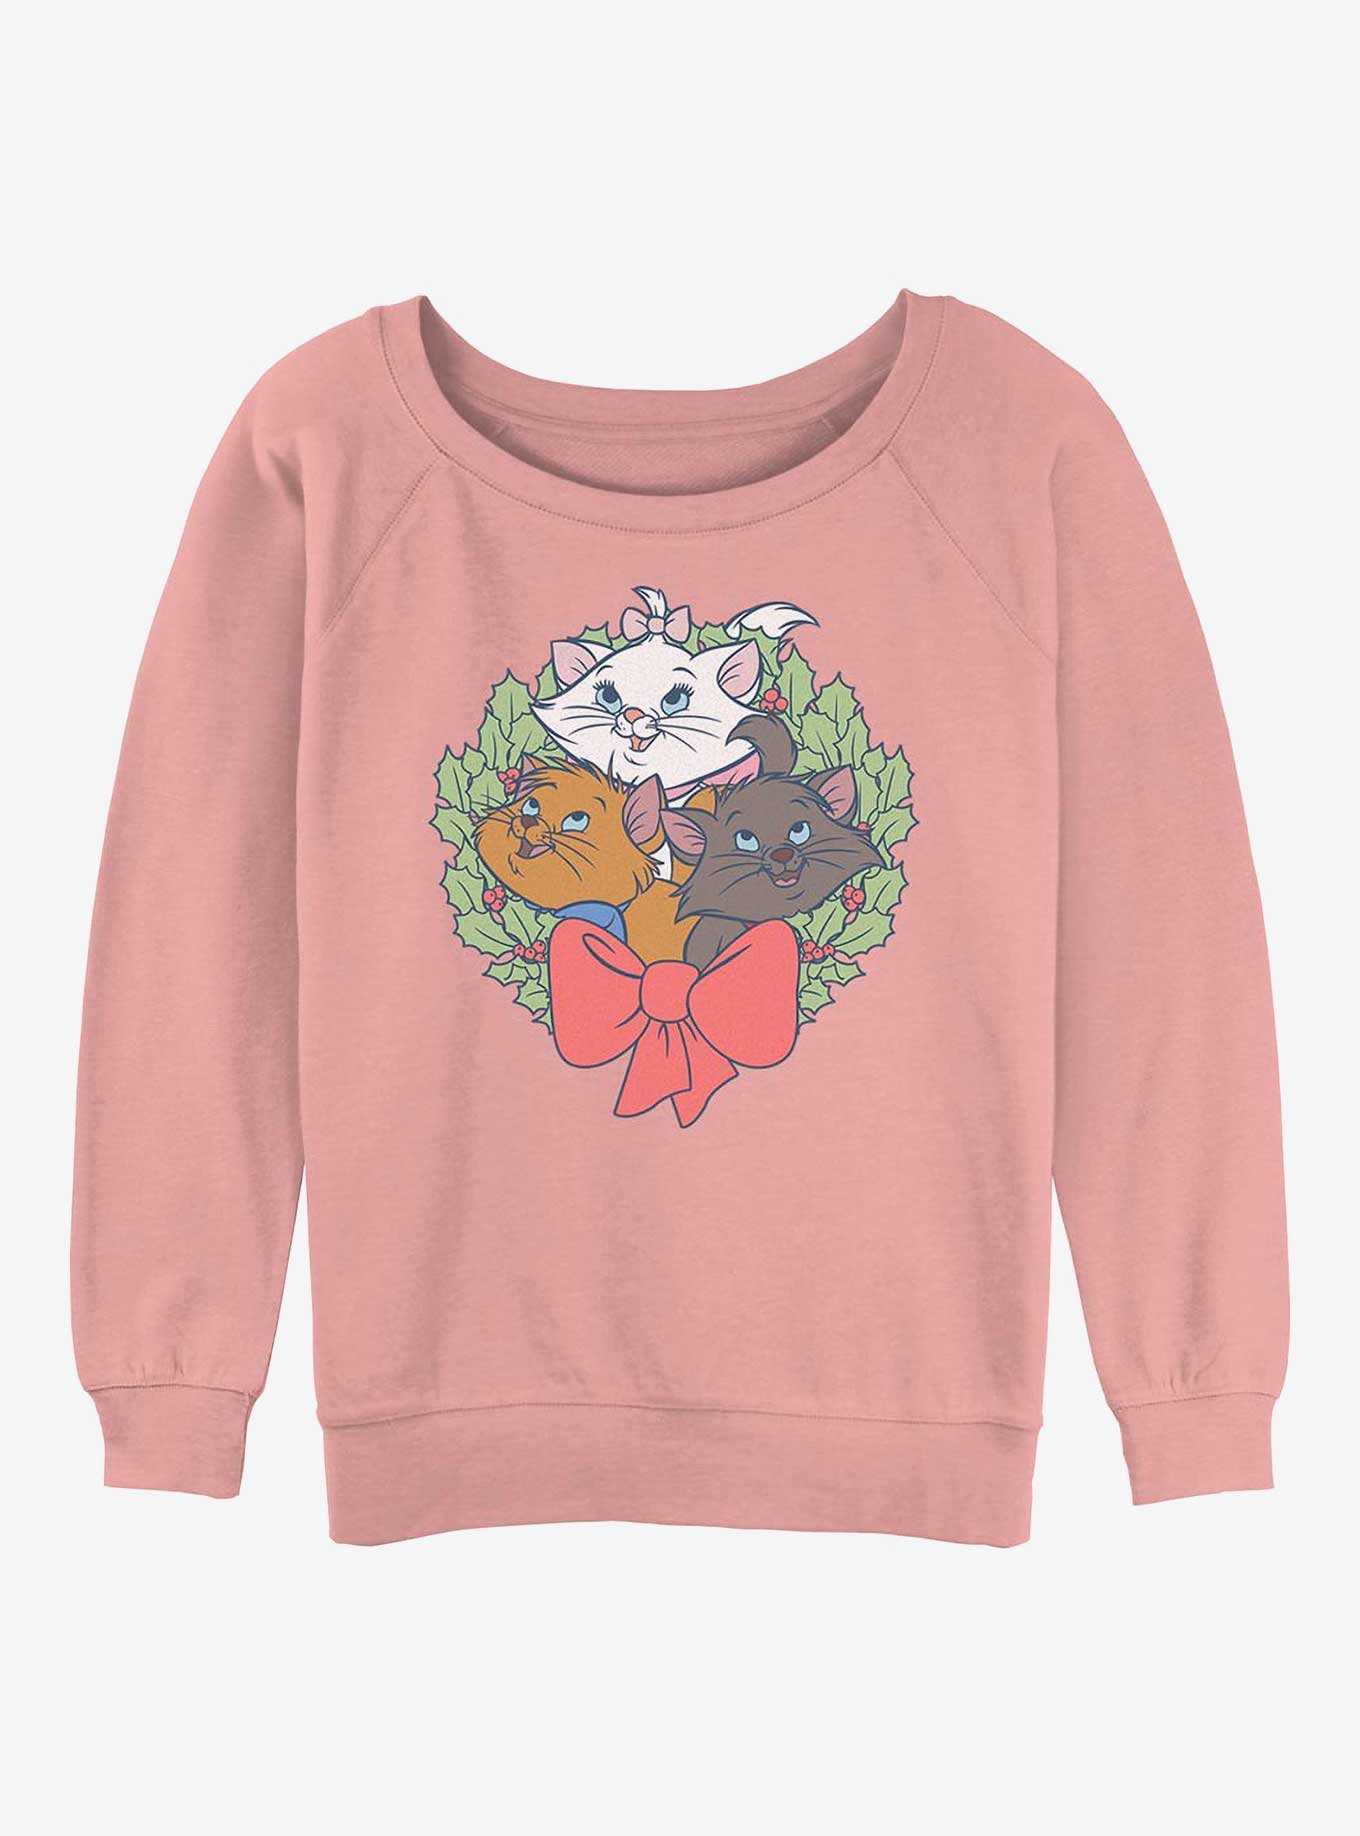 Disney The Aristocats Kitten Wreath Girls Slouchy Sweatshirt, , hi-res